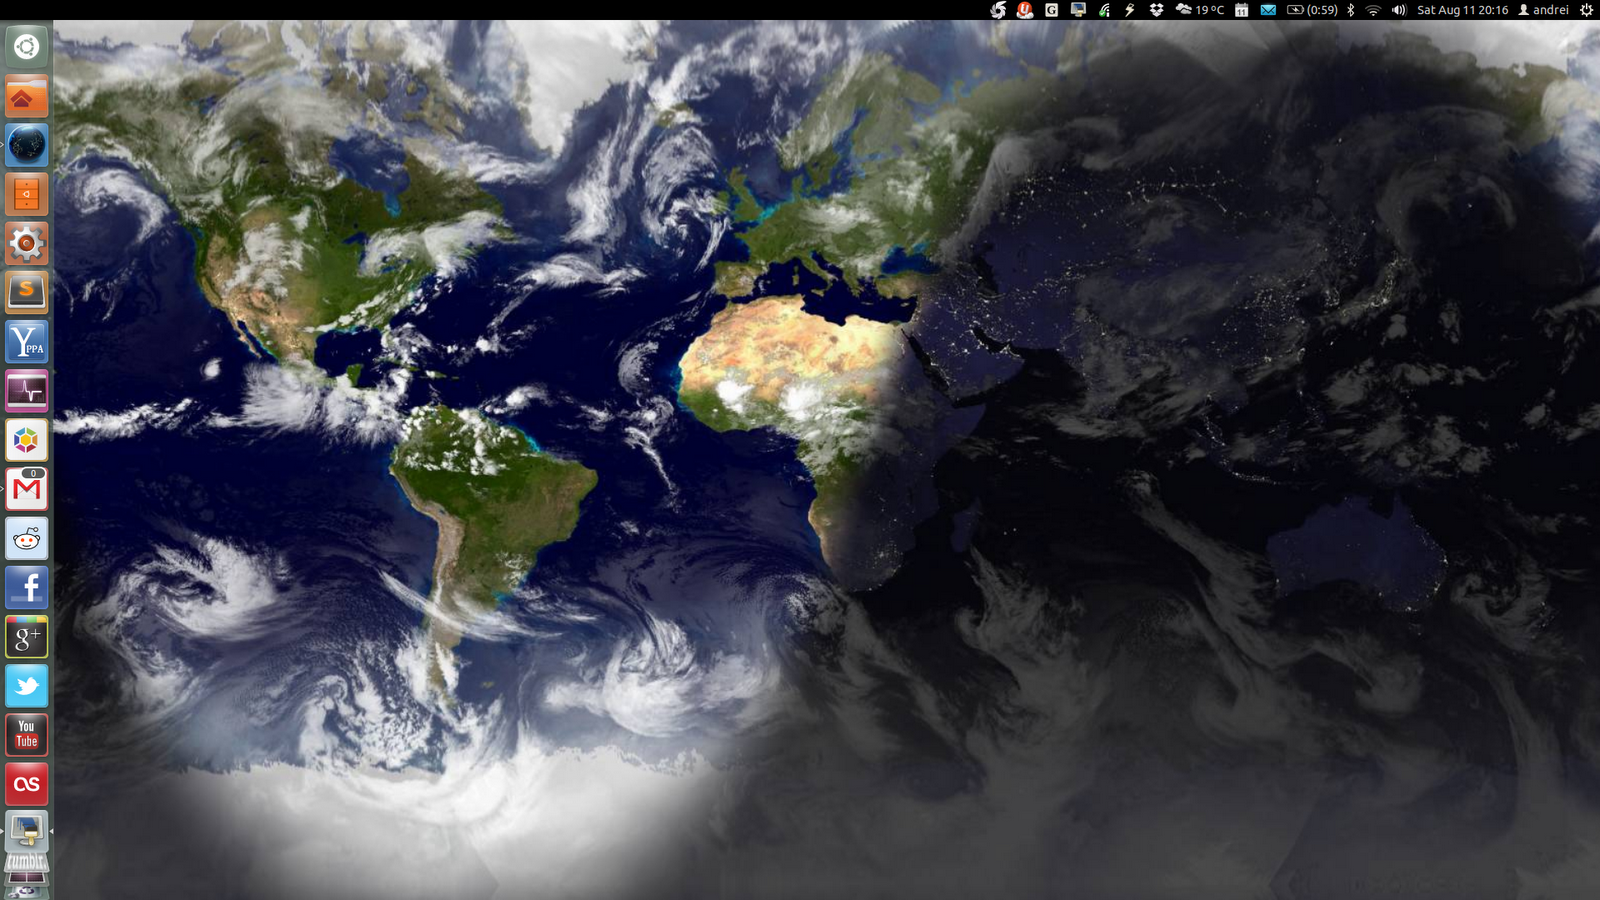 50+] Earth Live Wallpaper Windows 8 - WallpaperSafari